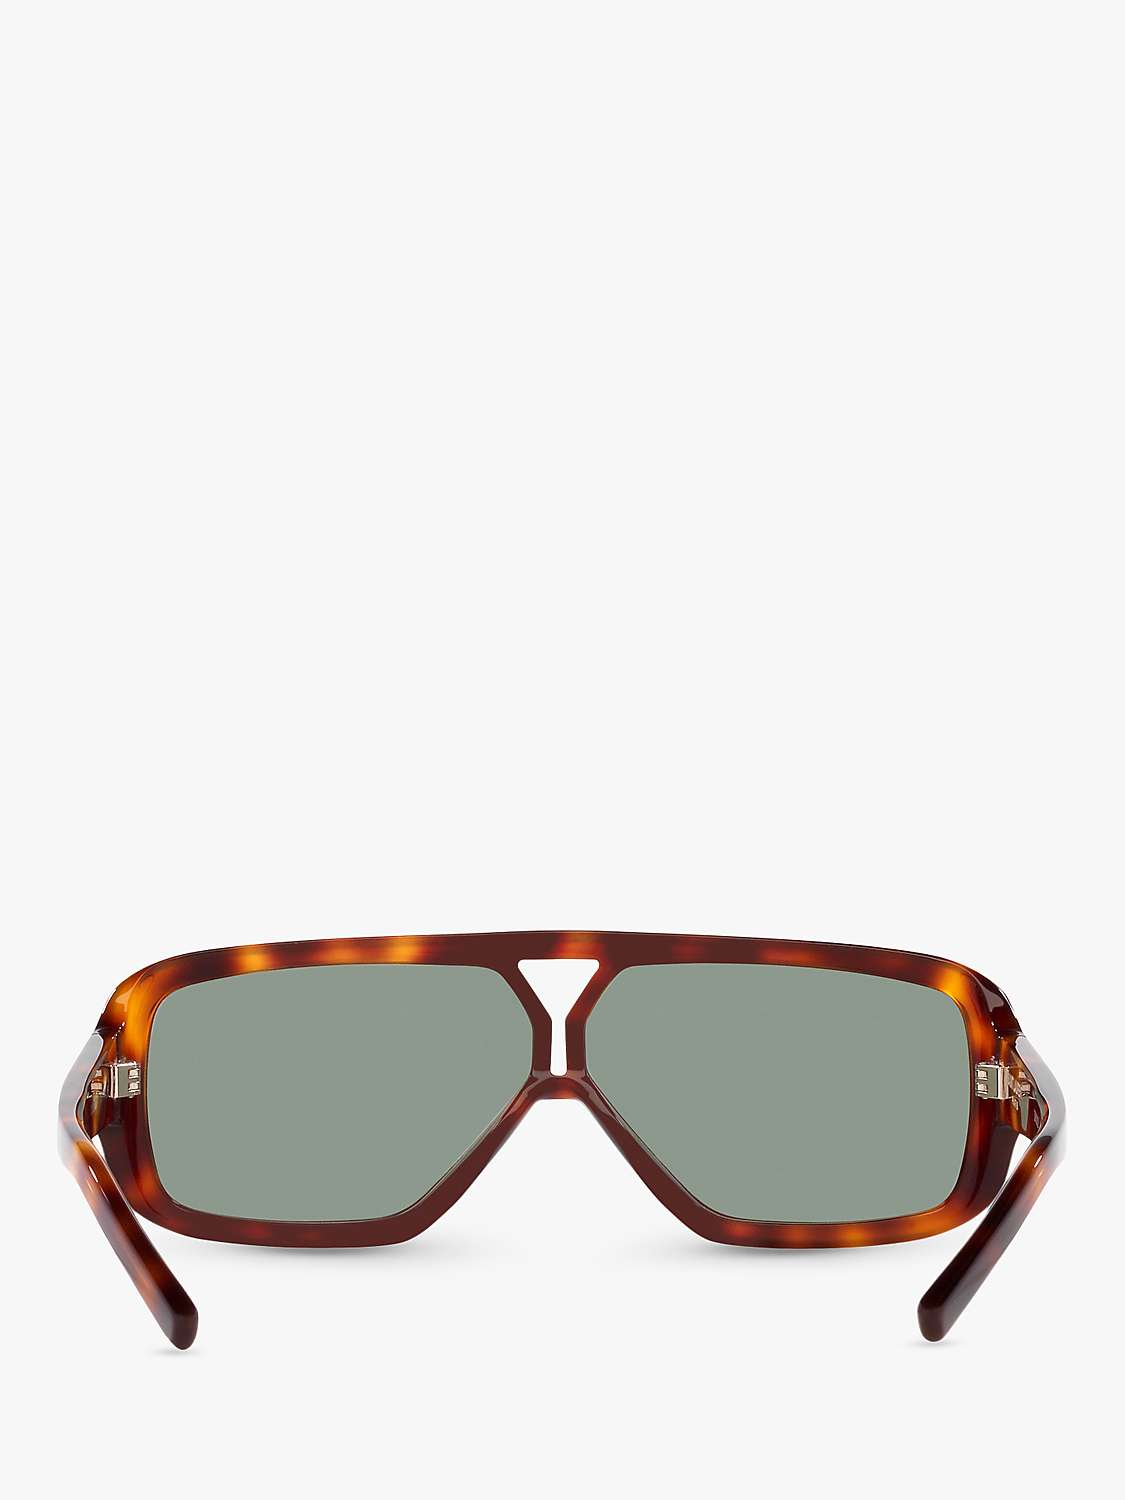 Buy Yves Saint Laurent YS000434 Women's Wrap Sunglasses, Havana/Green Online at johnlewis.com